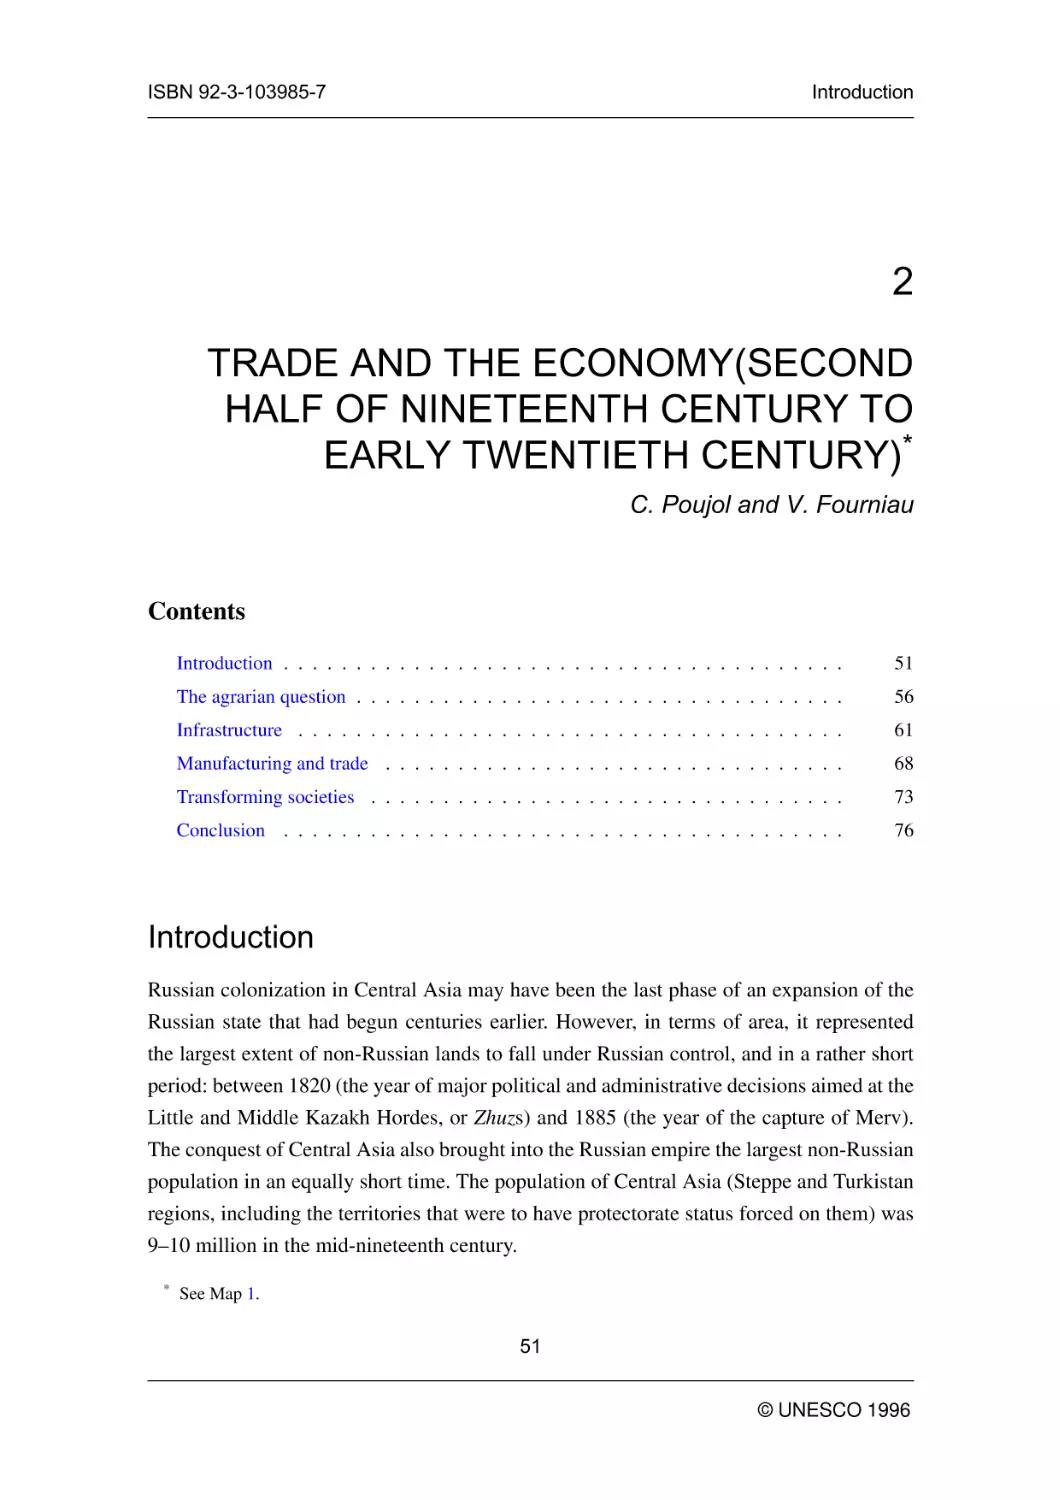 TRADE AND THE ECONOMY(SECOND HALF OF NINETEENTH CENTURY TO EARLY TWENTIETH CENTURY)